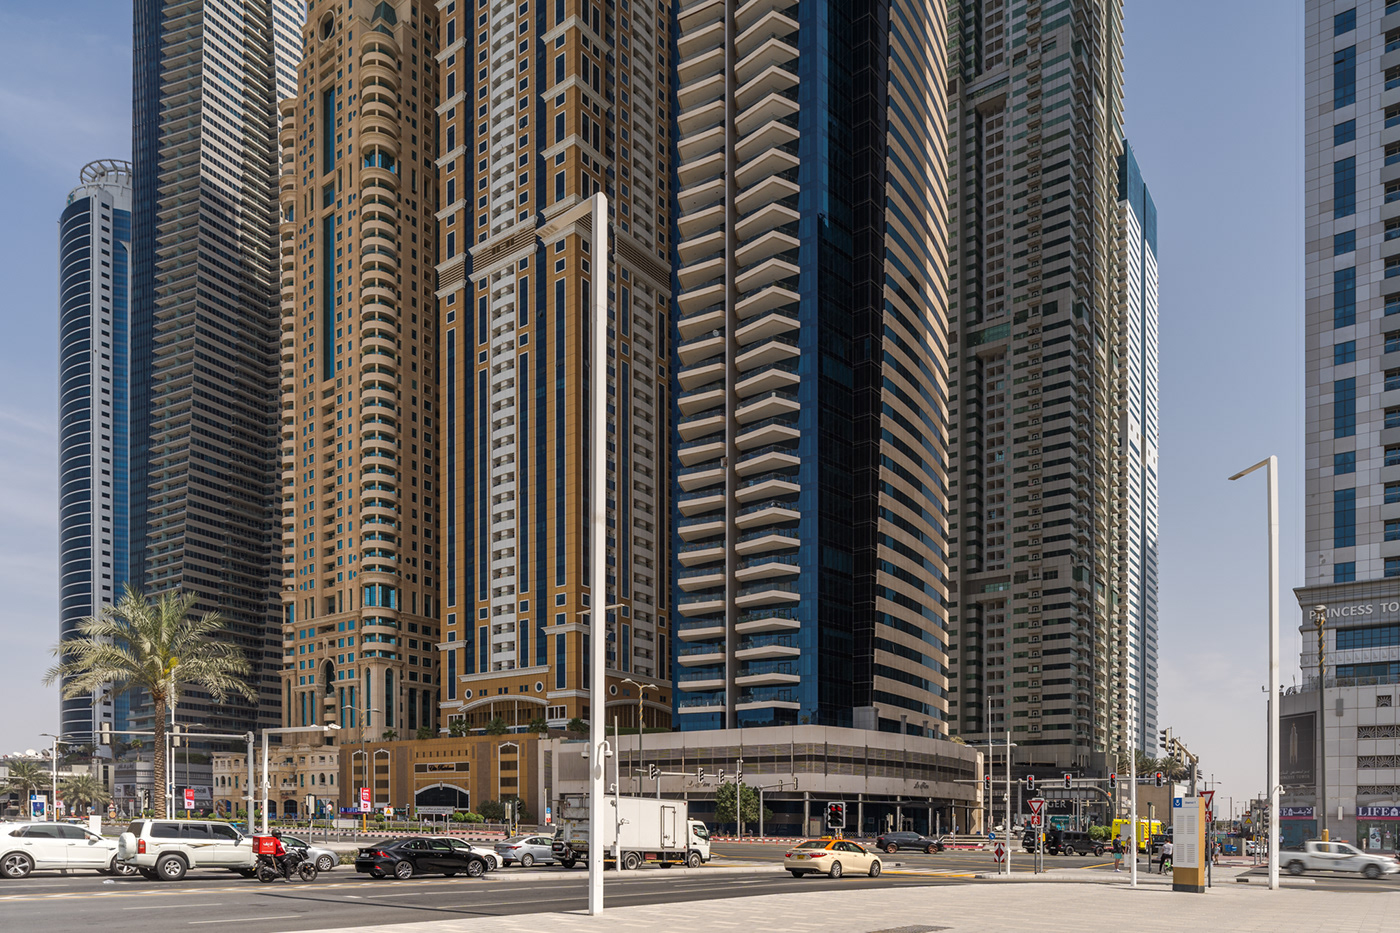 architectural architectural photography architecture Architecture Photography building buildings dubai dubai marina Uae Dubai Urban